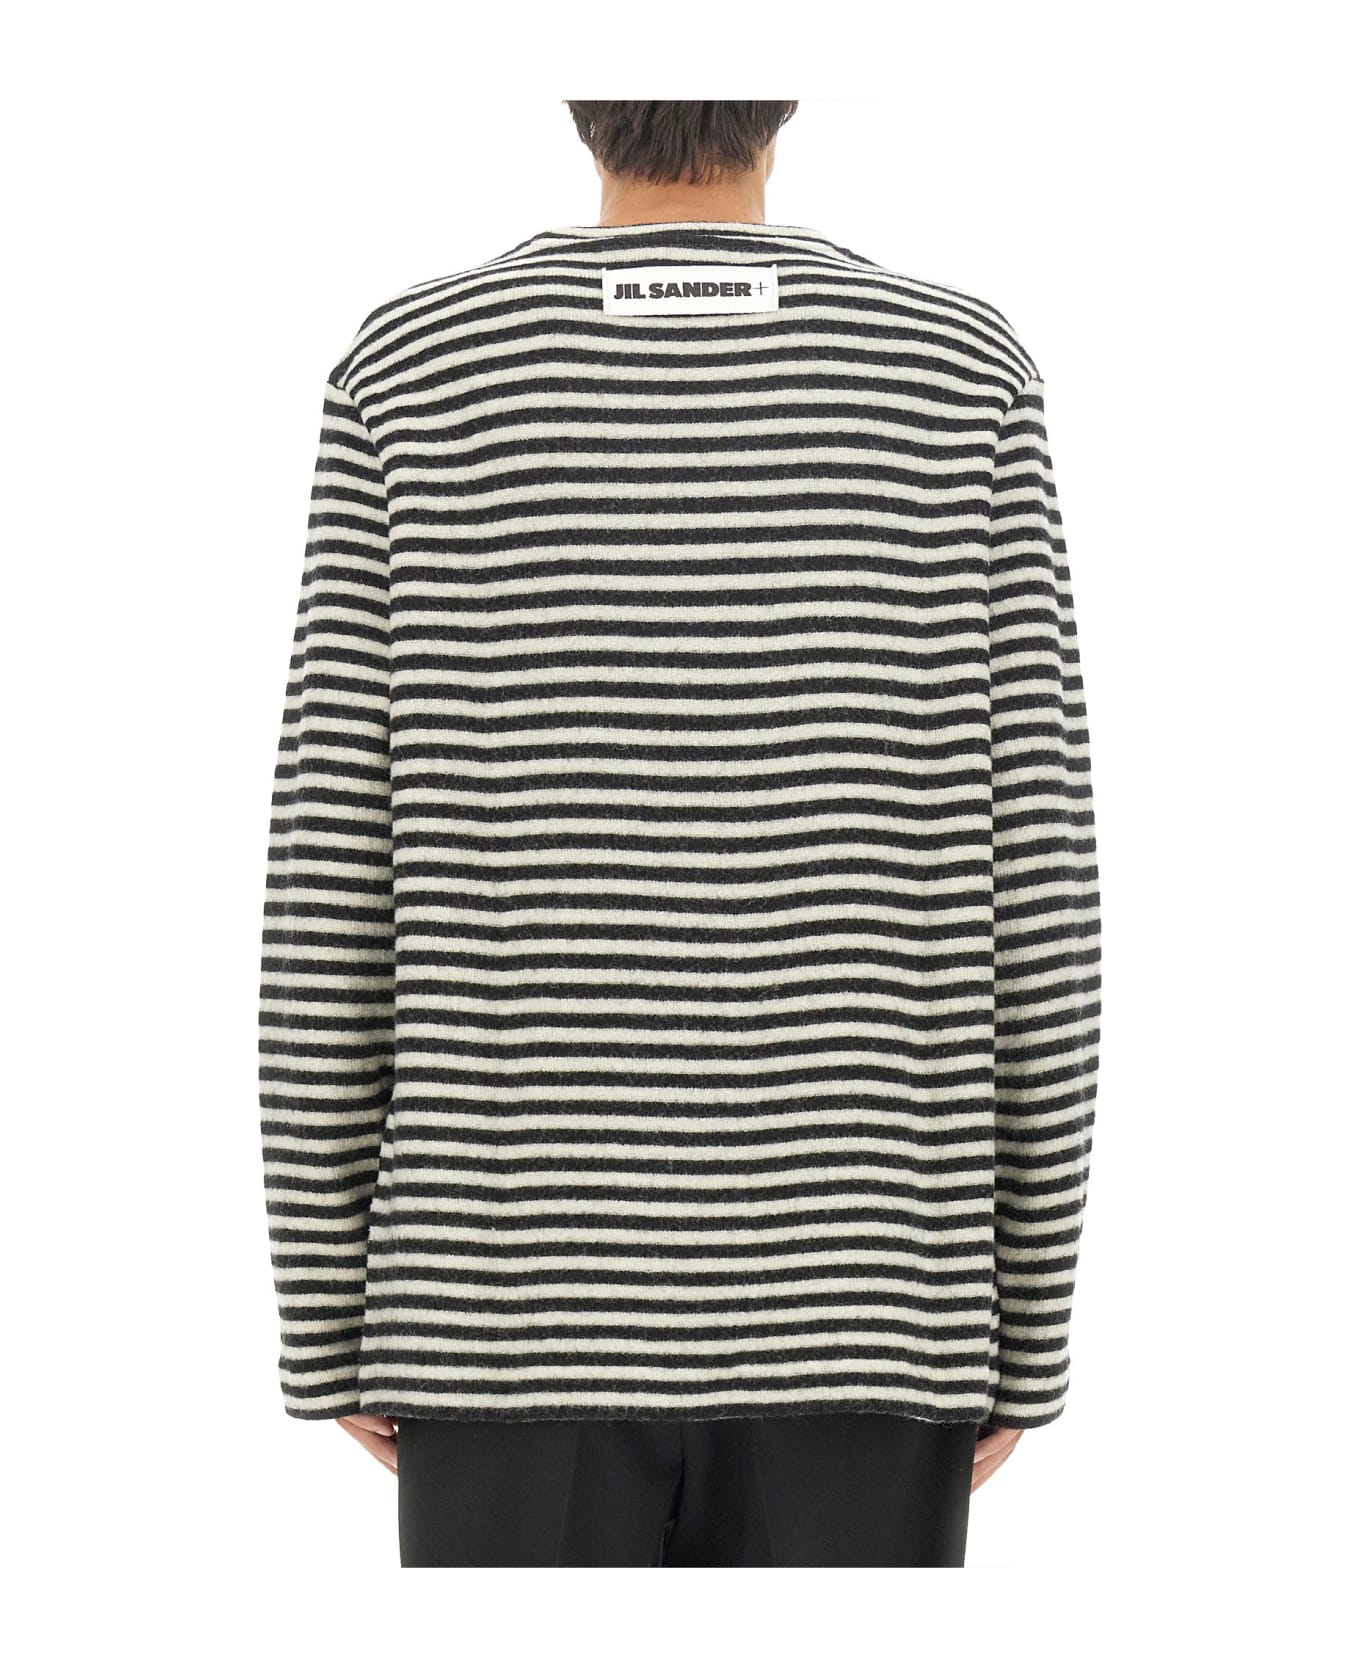 Jil Sander Striped Shirt - Nero/bianco ニットウェア